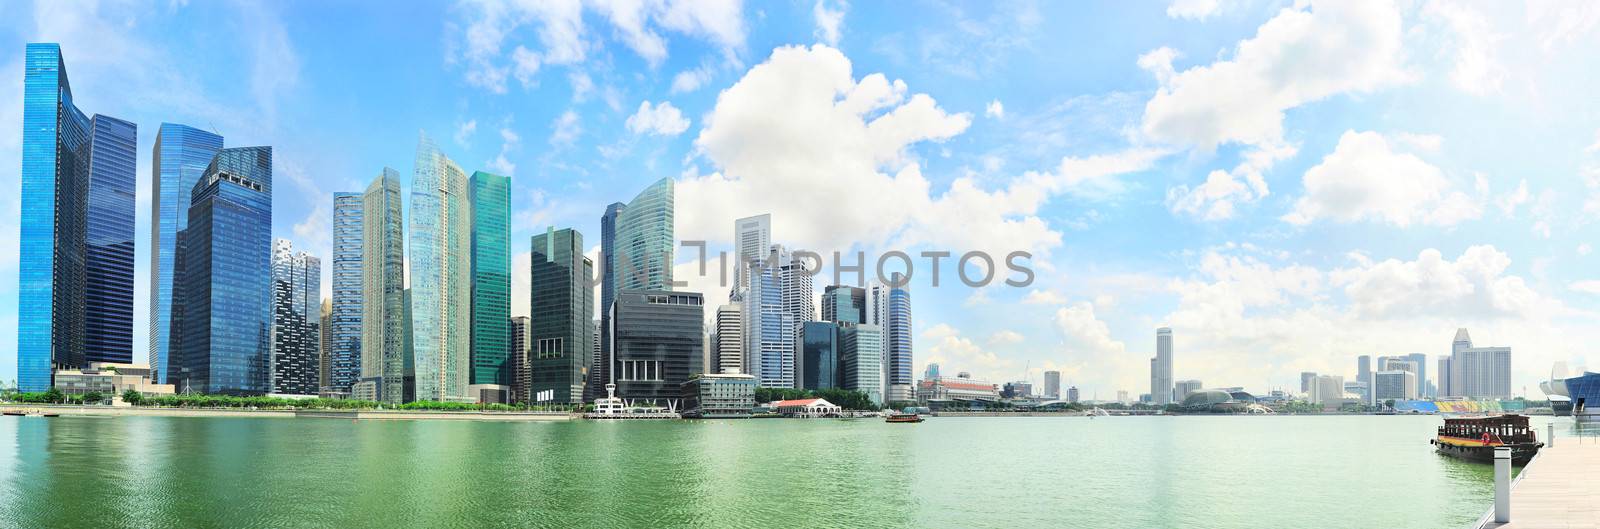 Panoramic view on Singapore city center by joyfull